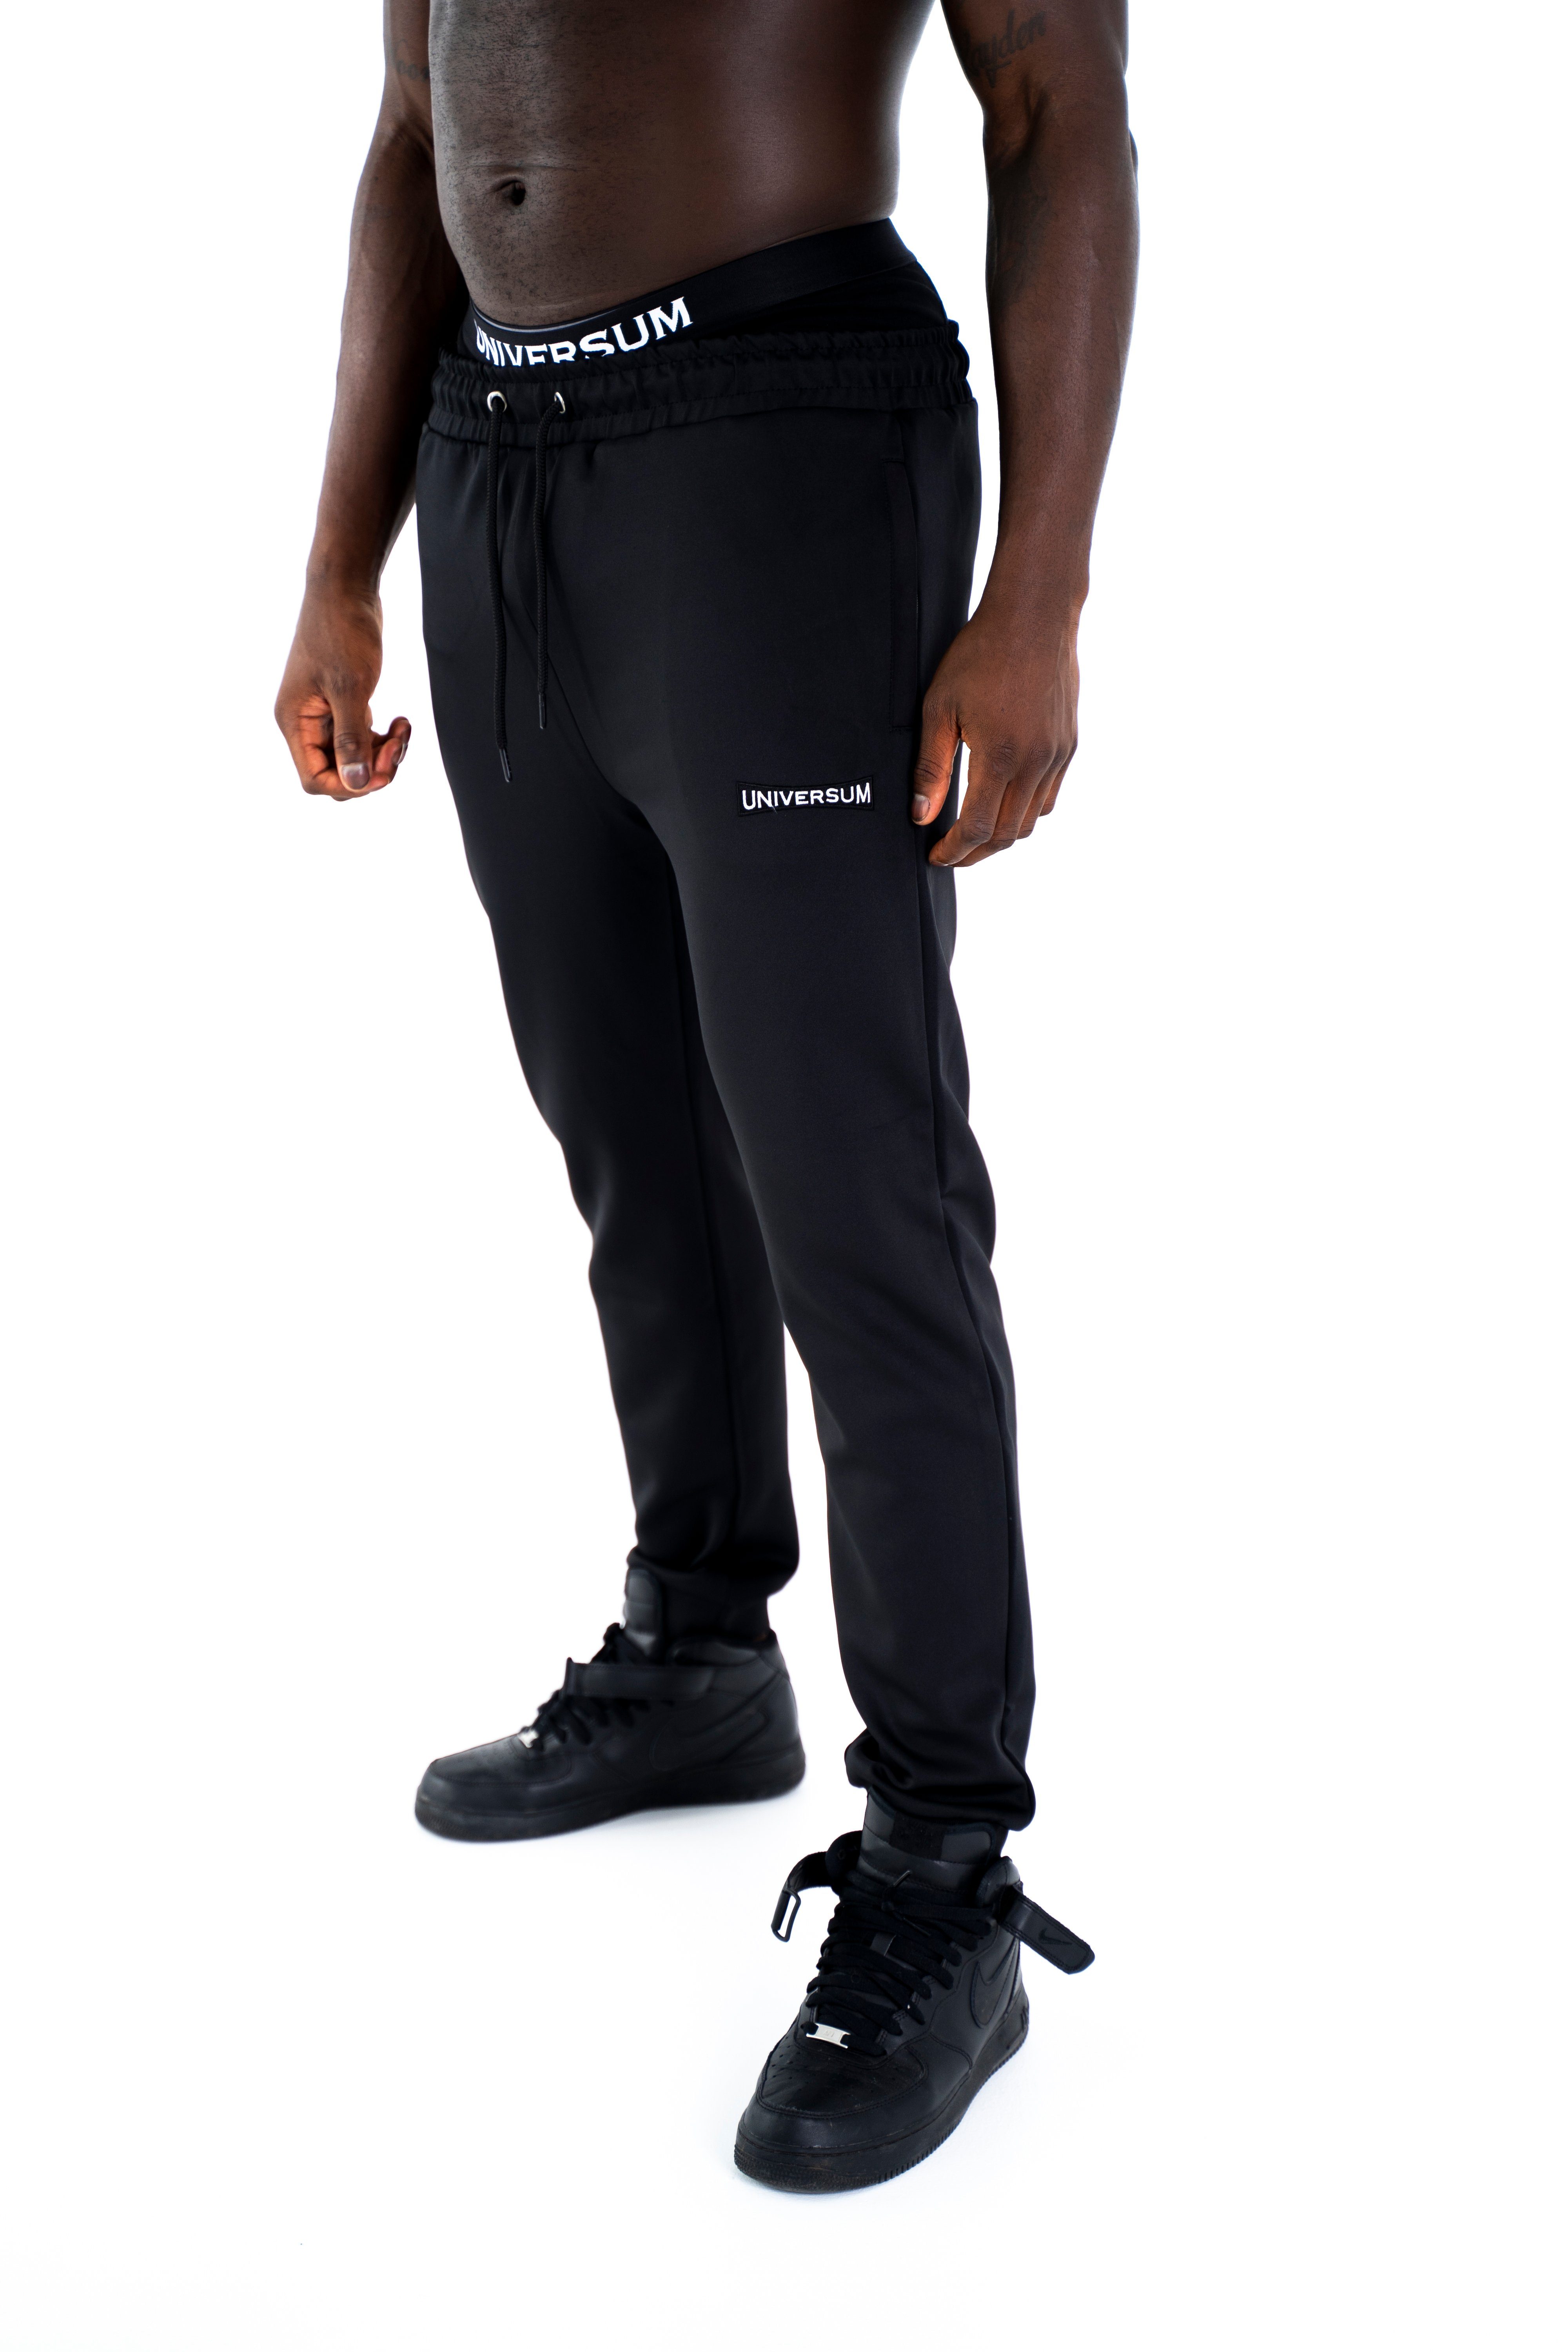 Modern Universum Jogginghose schwarz Freizeit Fitness Jogginghose Sportwear Sport, und Pants Fit für